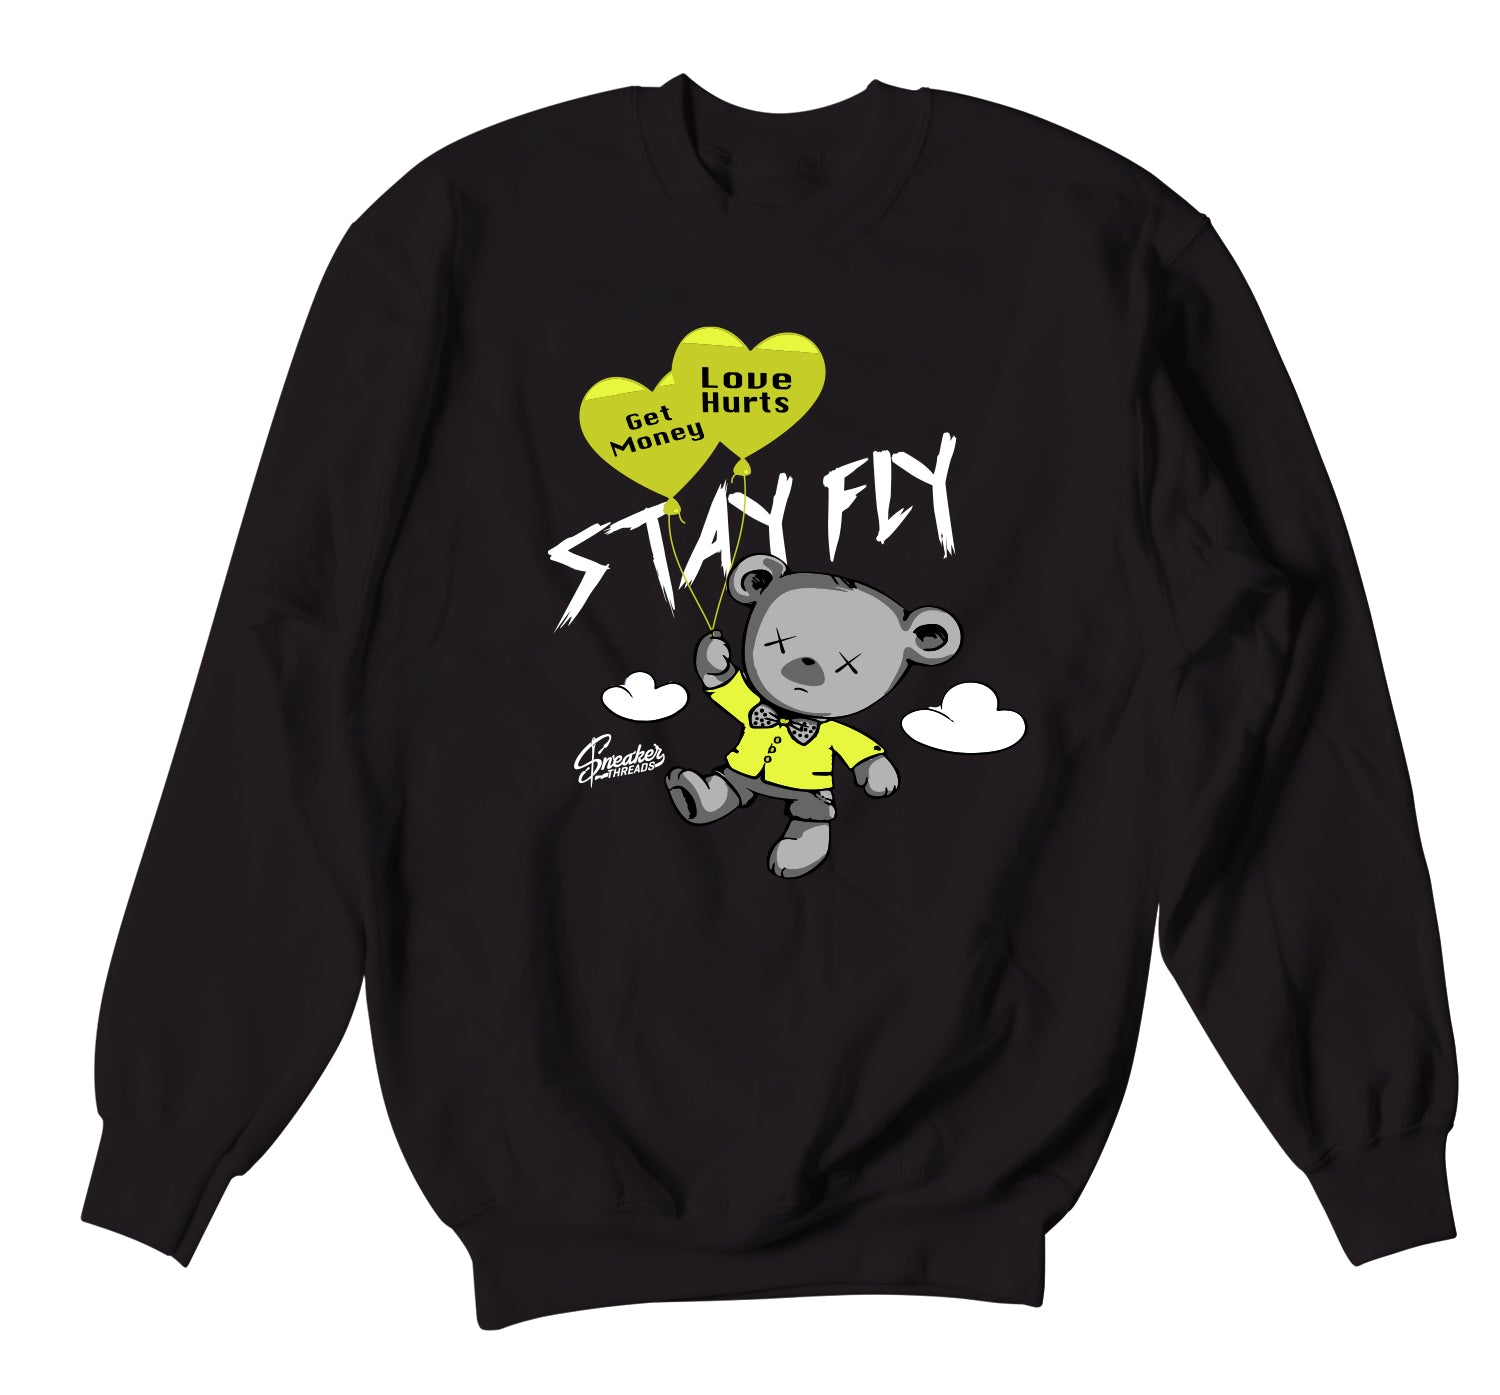 Foamposite Pro Volt Sweater - Money Over Love - Black